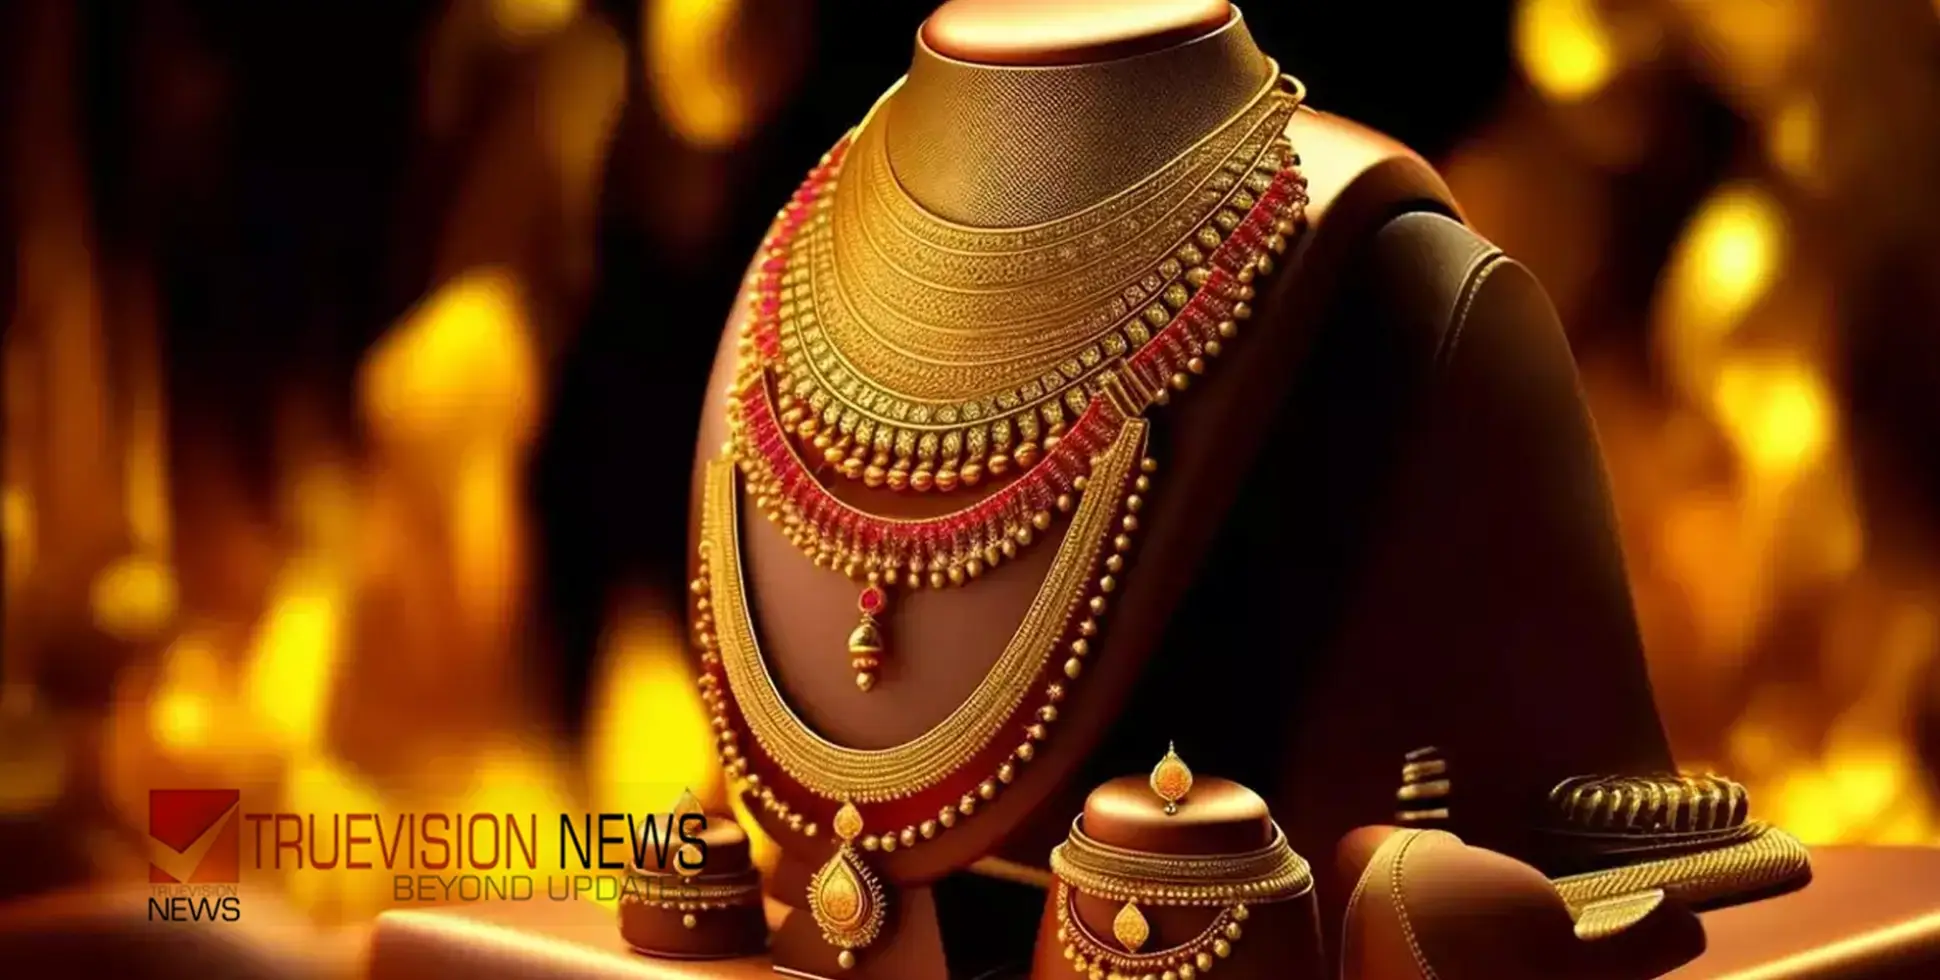 #goldrate |'അമ്പമ്പോ അമ്പതിനായിരം'; ചരിത്രത്തിലെ ഏറ്റവും വലിയ വിലയിൽ സ്വർണം! നിരക്ക് ഉയരാനുള്ള കാരണം ഇതാണ്